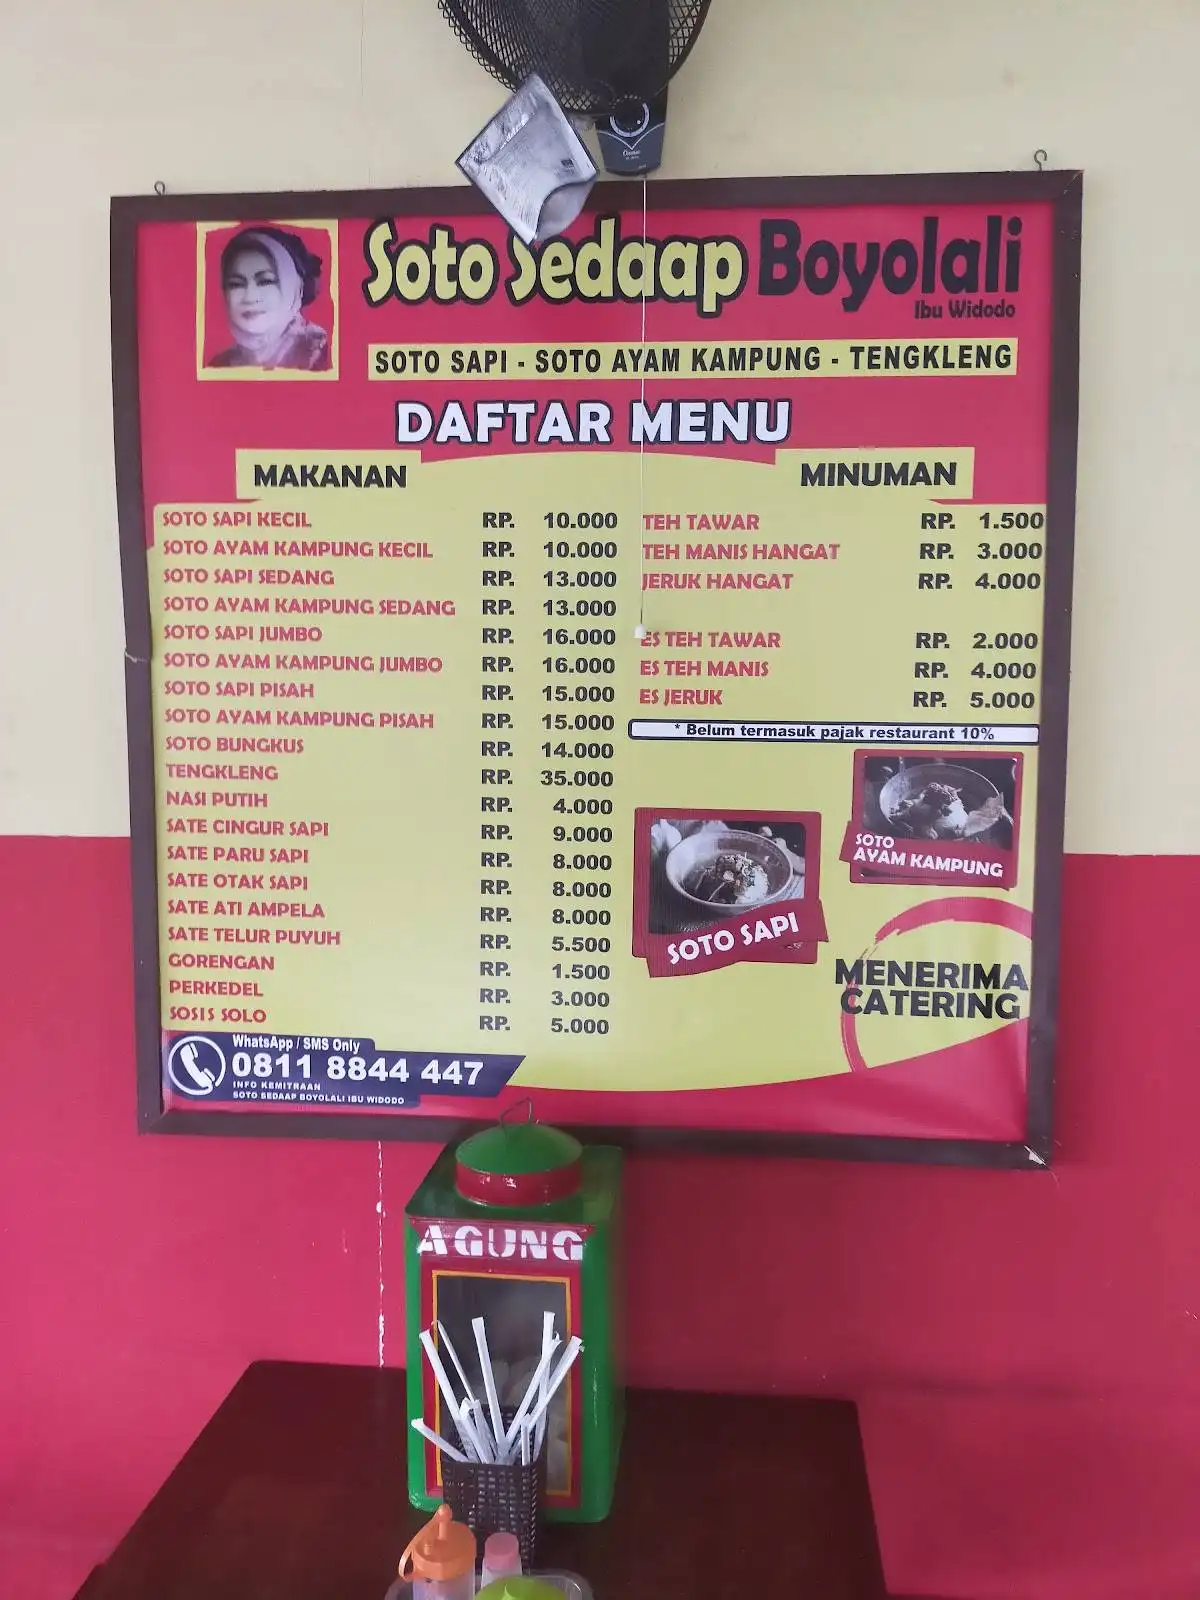 Soto Sedaap Boyolali